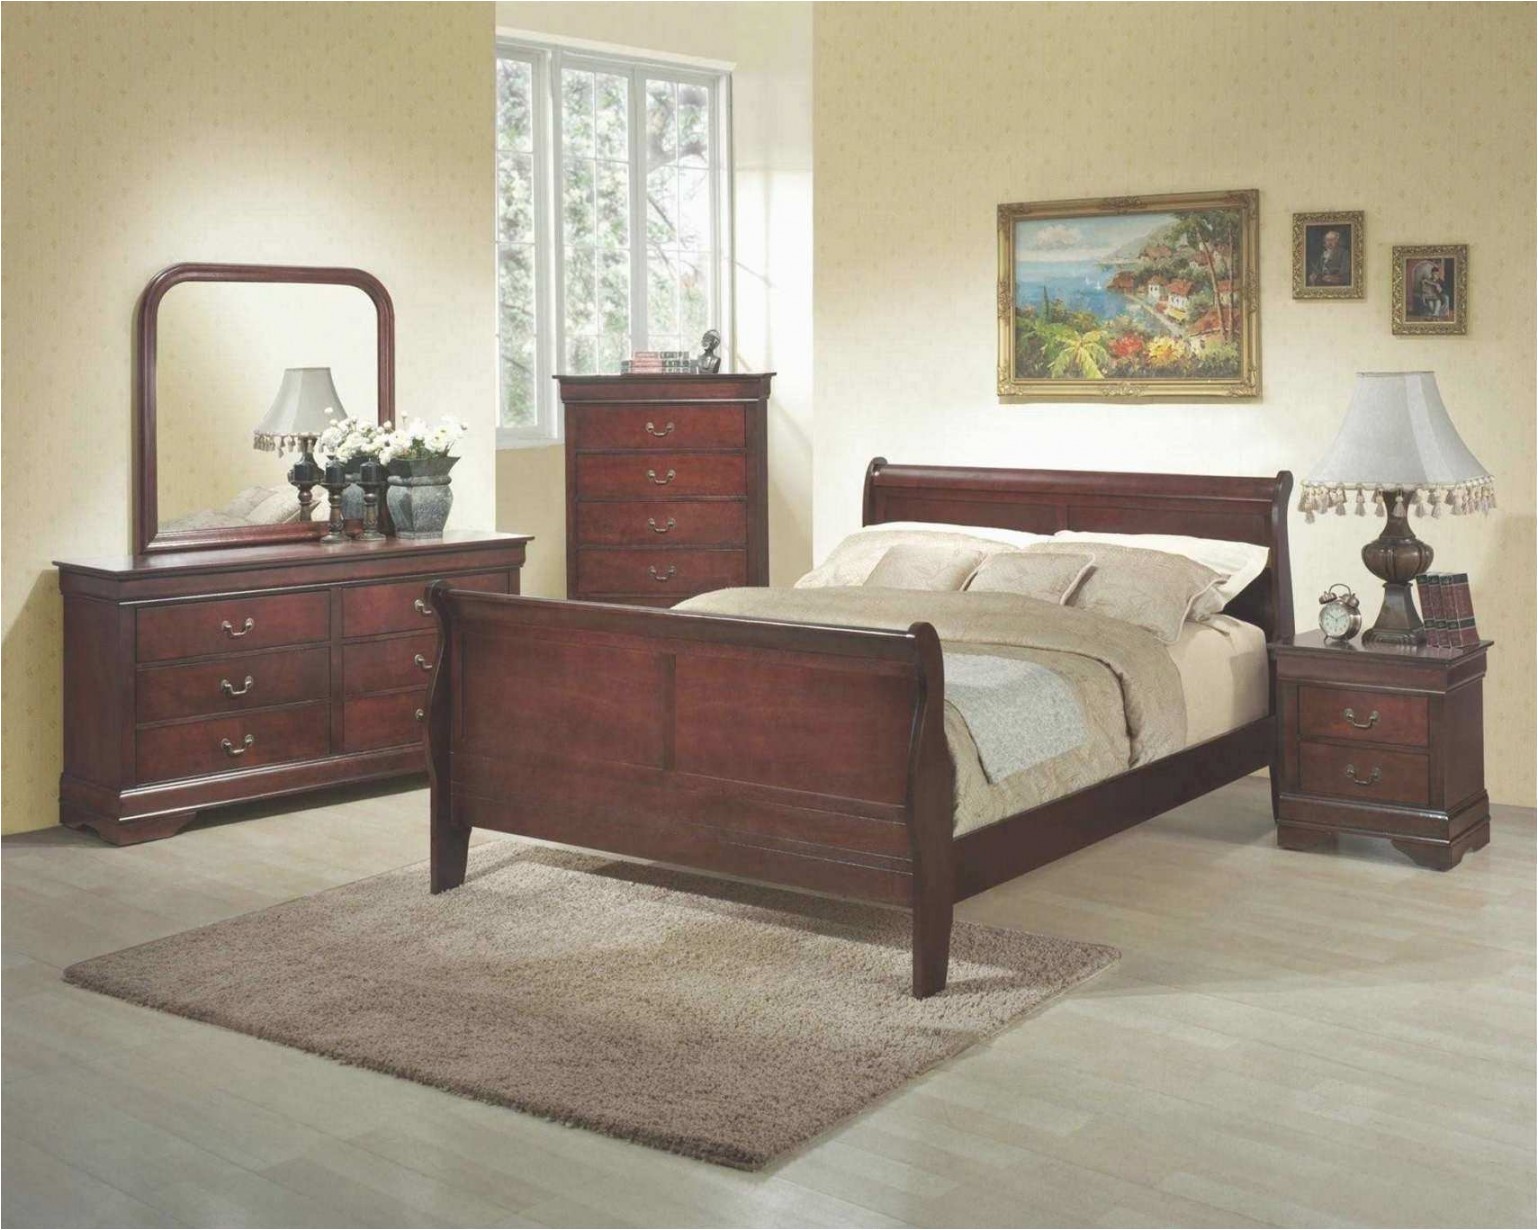 discontinued pier 1 bedroom furniture